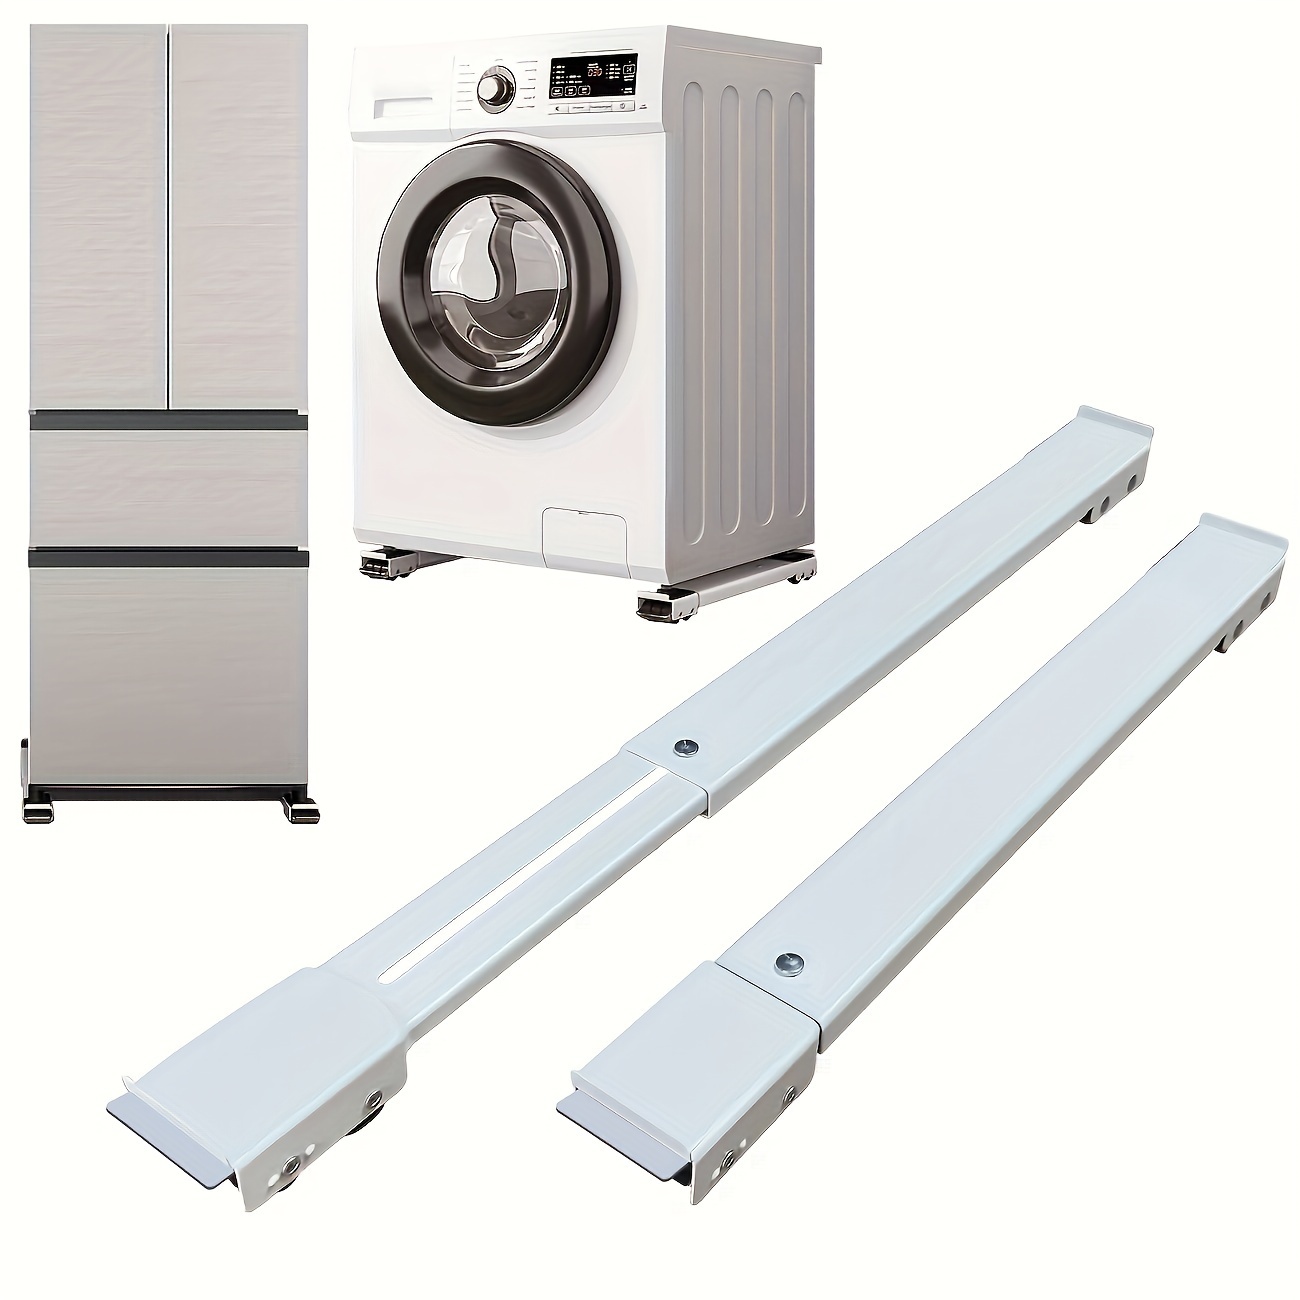 Soporte para lavadora con freno extensible, Base para refrigerador